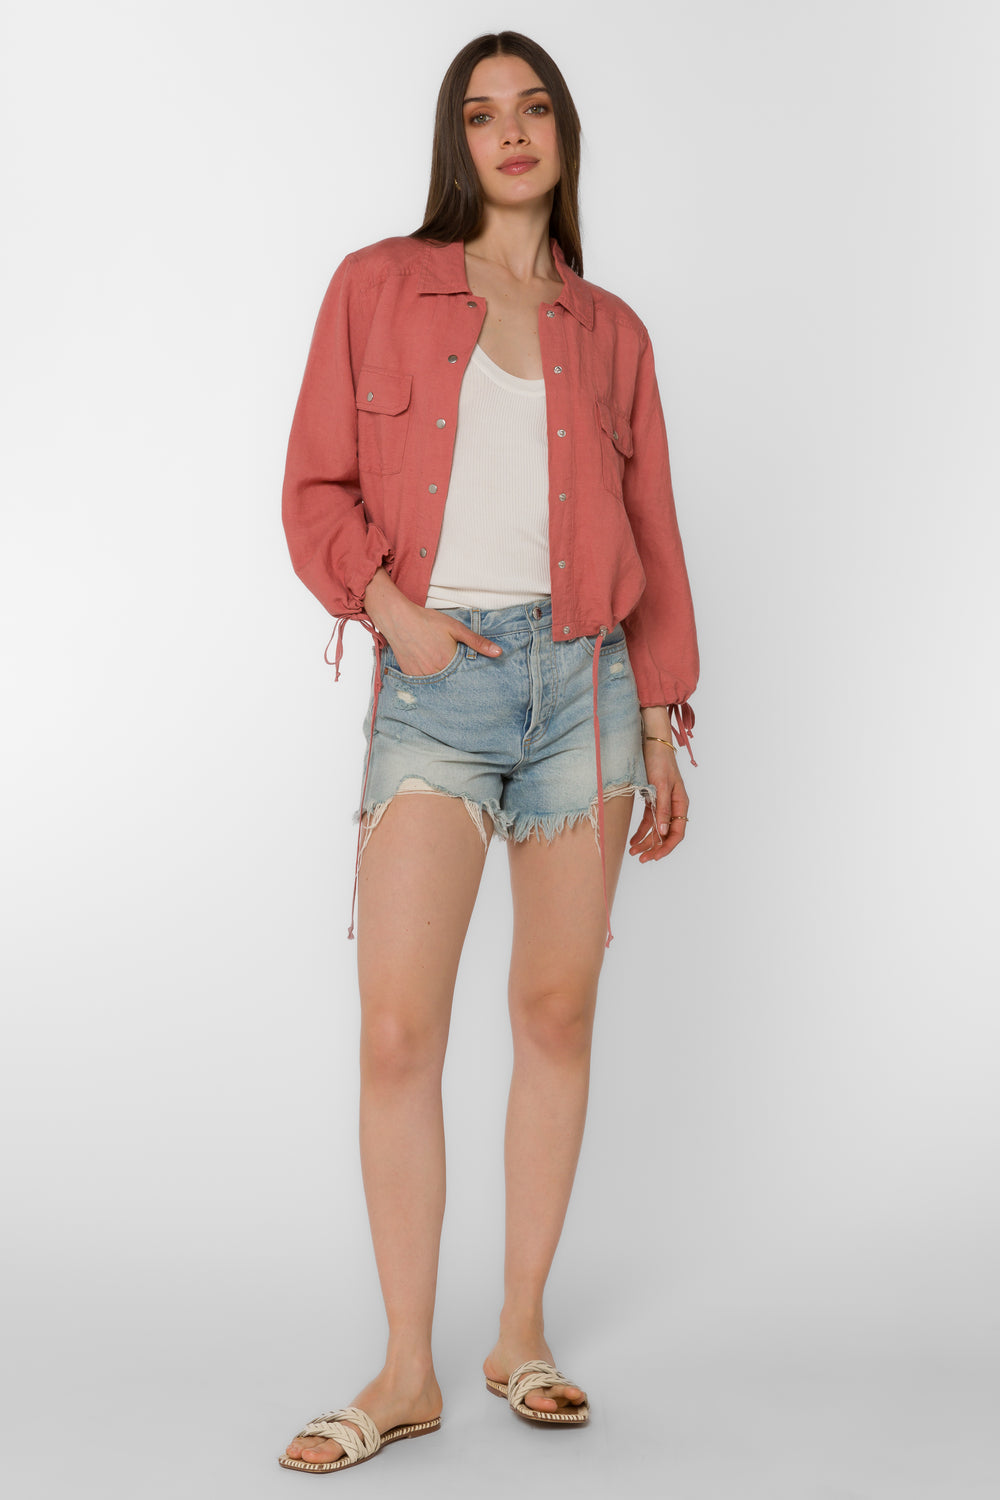 Zora Canyon Rose Jacket - Jackets & Outerwear - Velvet Heart Clothing